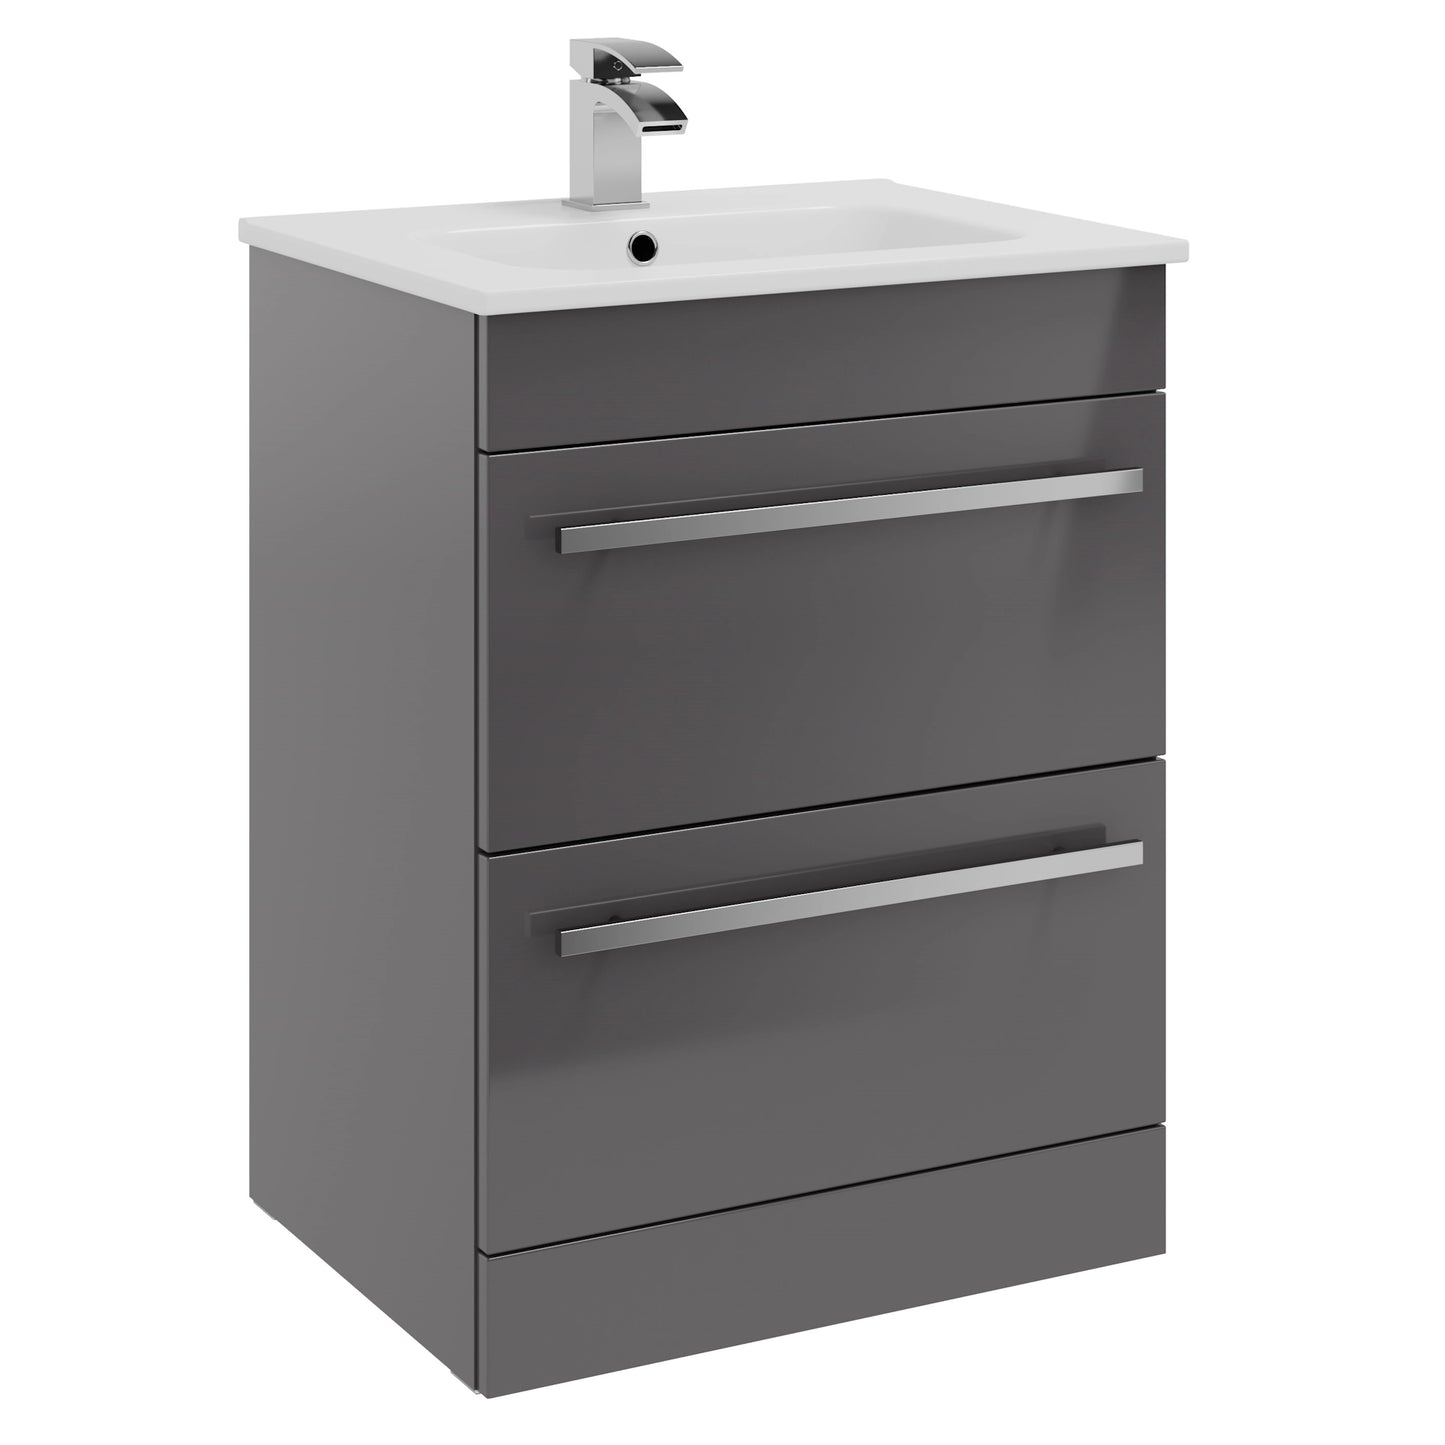 Purity Kartell Floor Standing Two Drawer 600mm Basin Sink Vanity Unit